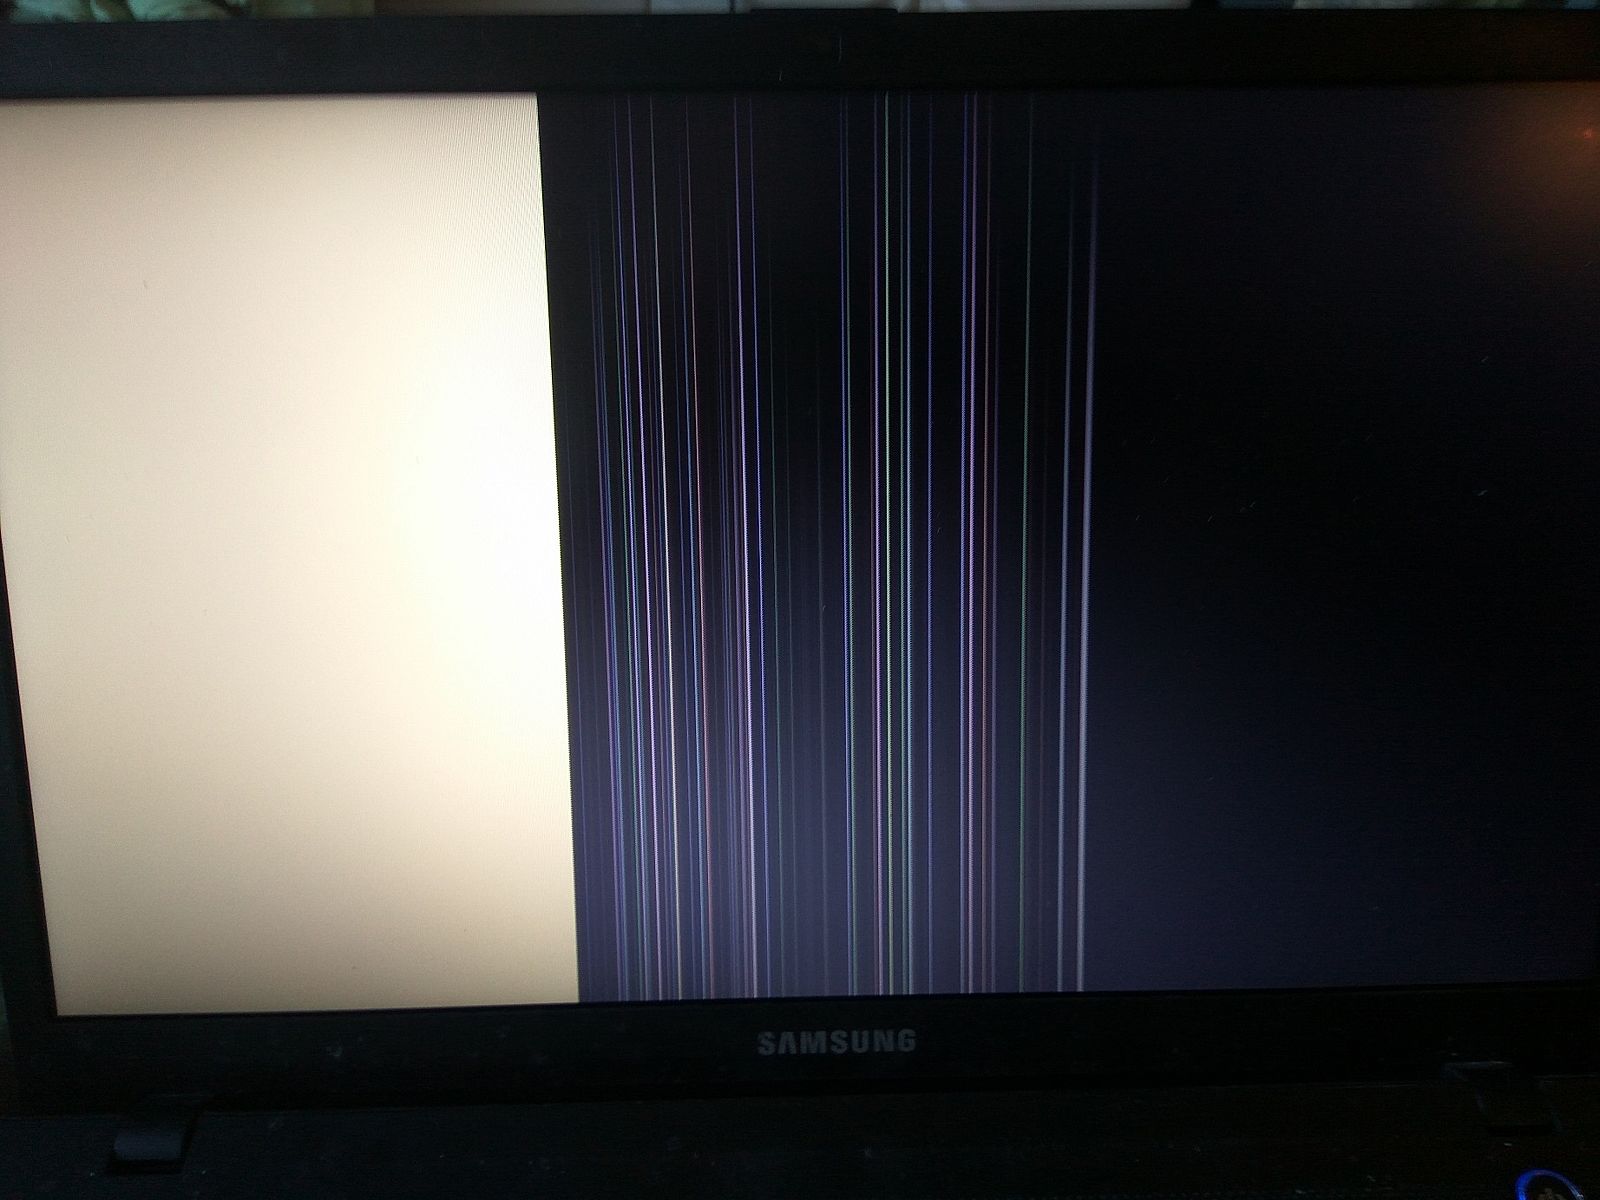 Черная полоска на телевизоре. ЖК самсунг вертикальная полоса. Samsung 2243nwx вертикальная полоса. LG 32lg5000 белая вертикальная полоса. Вертикальные полосы 32lm340t.